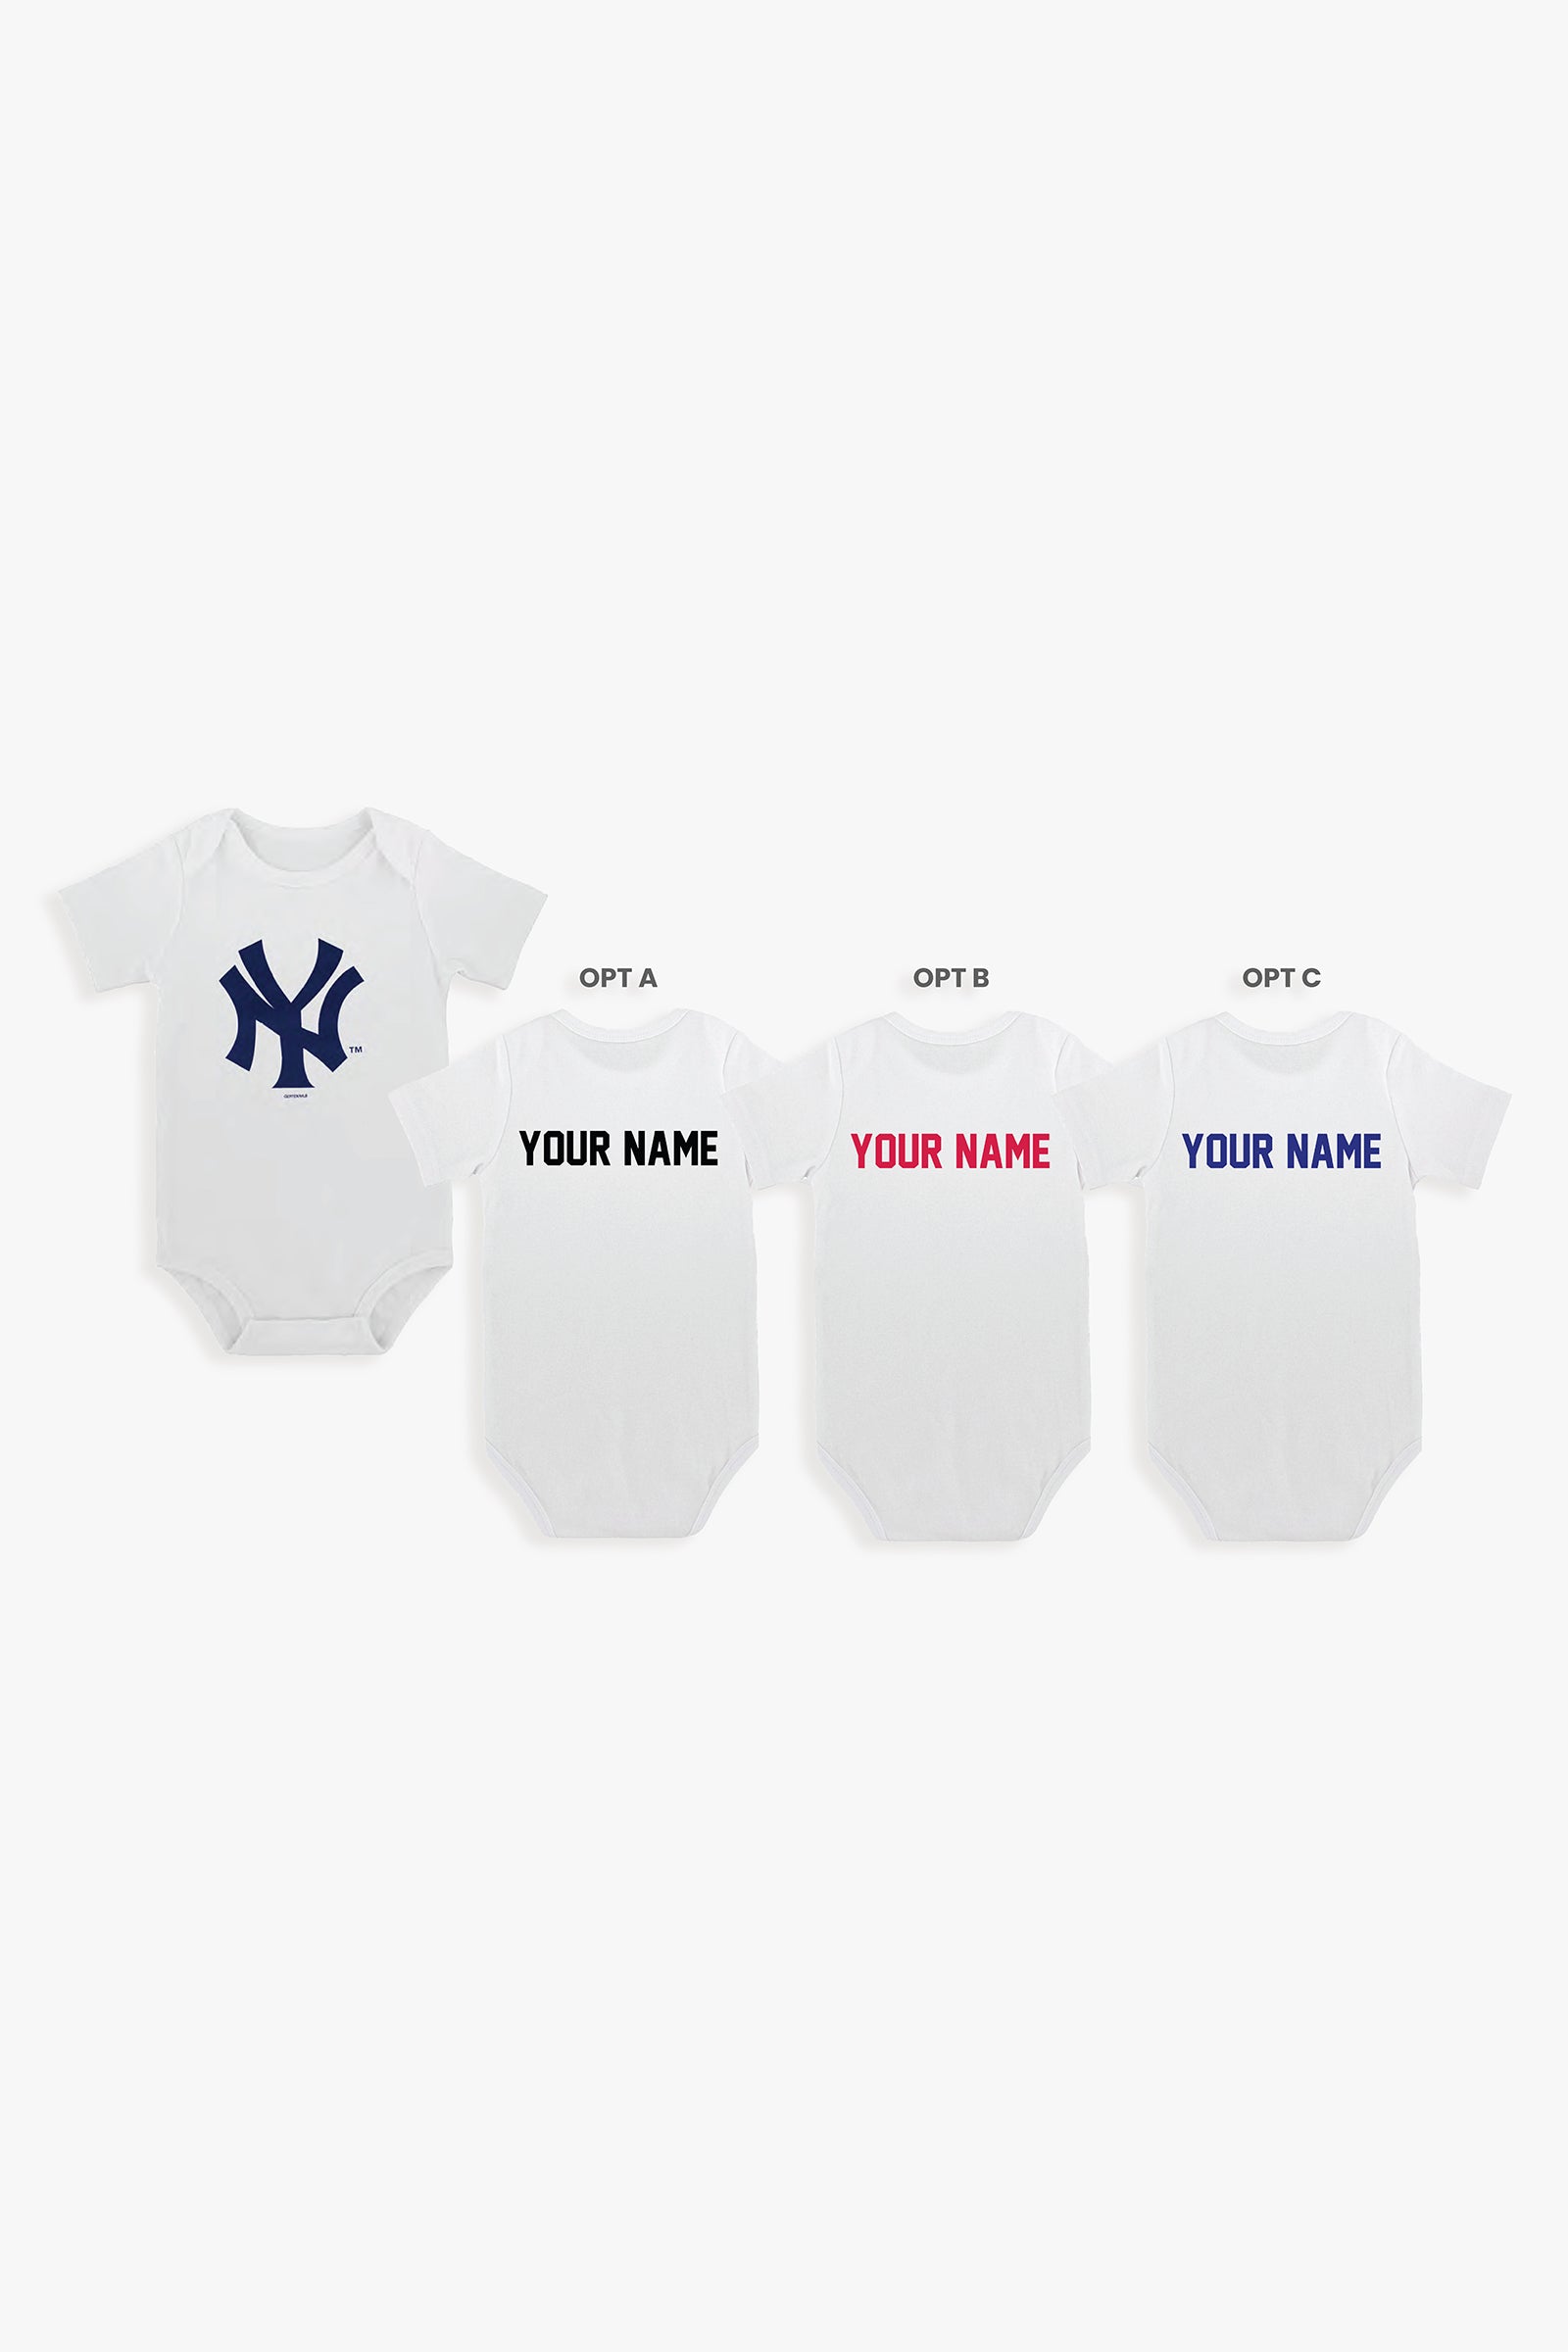 Yankees Baby MLB New York Yankees Romper